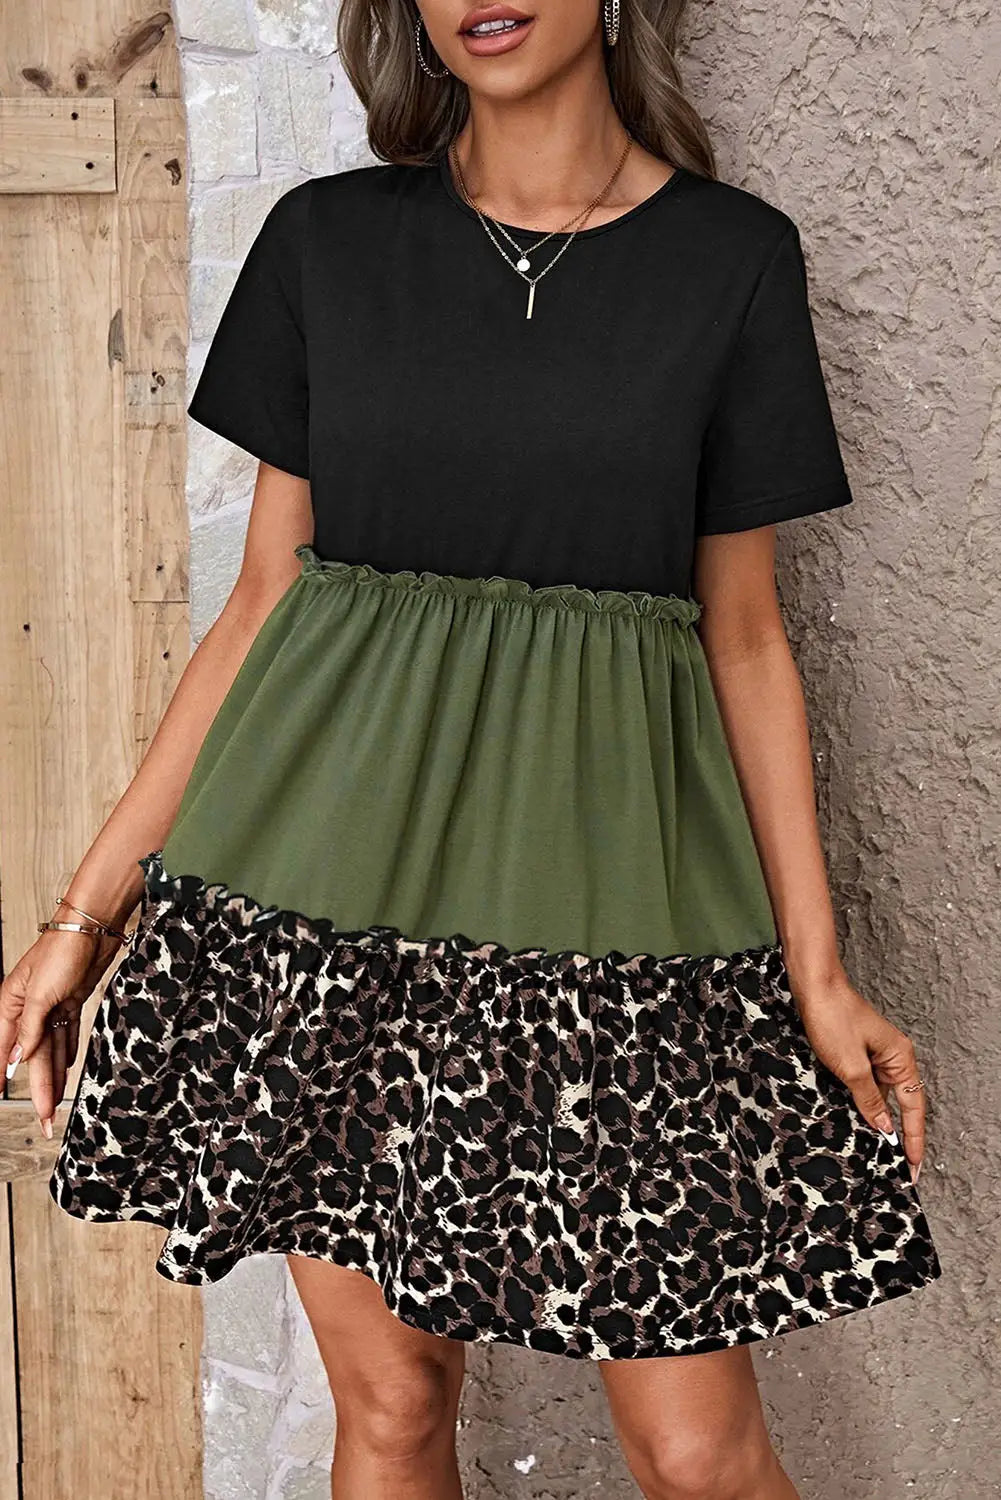 Beige leopard frill trim t-shirt dress - t shirt dresses